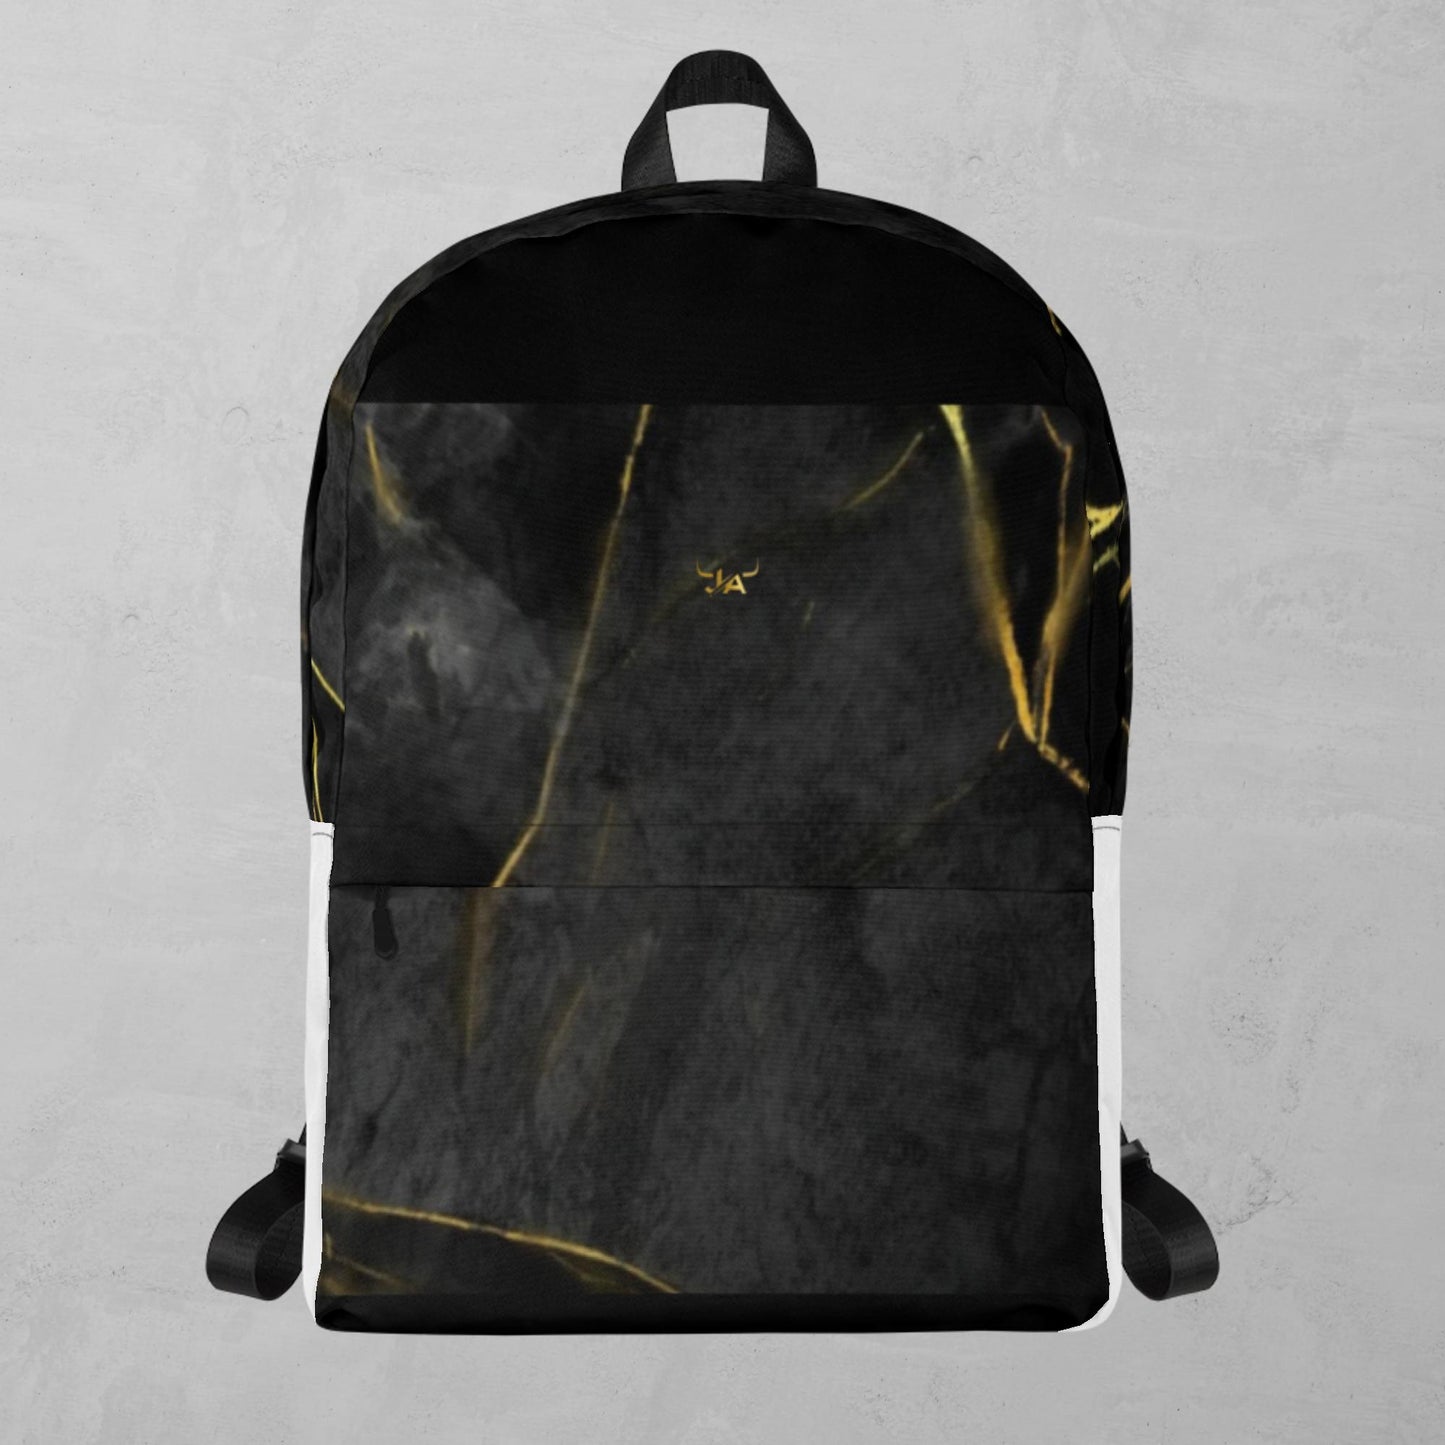 J.A Gold Backpack